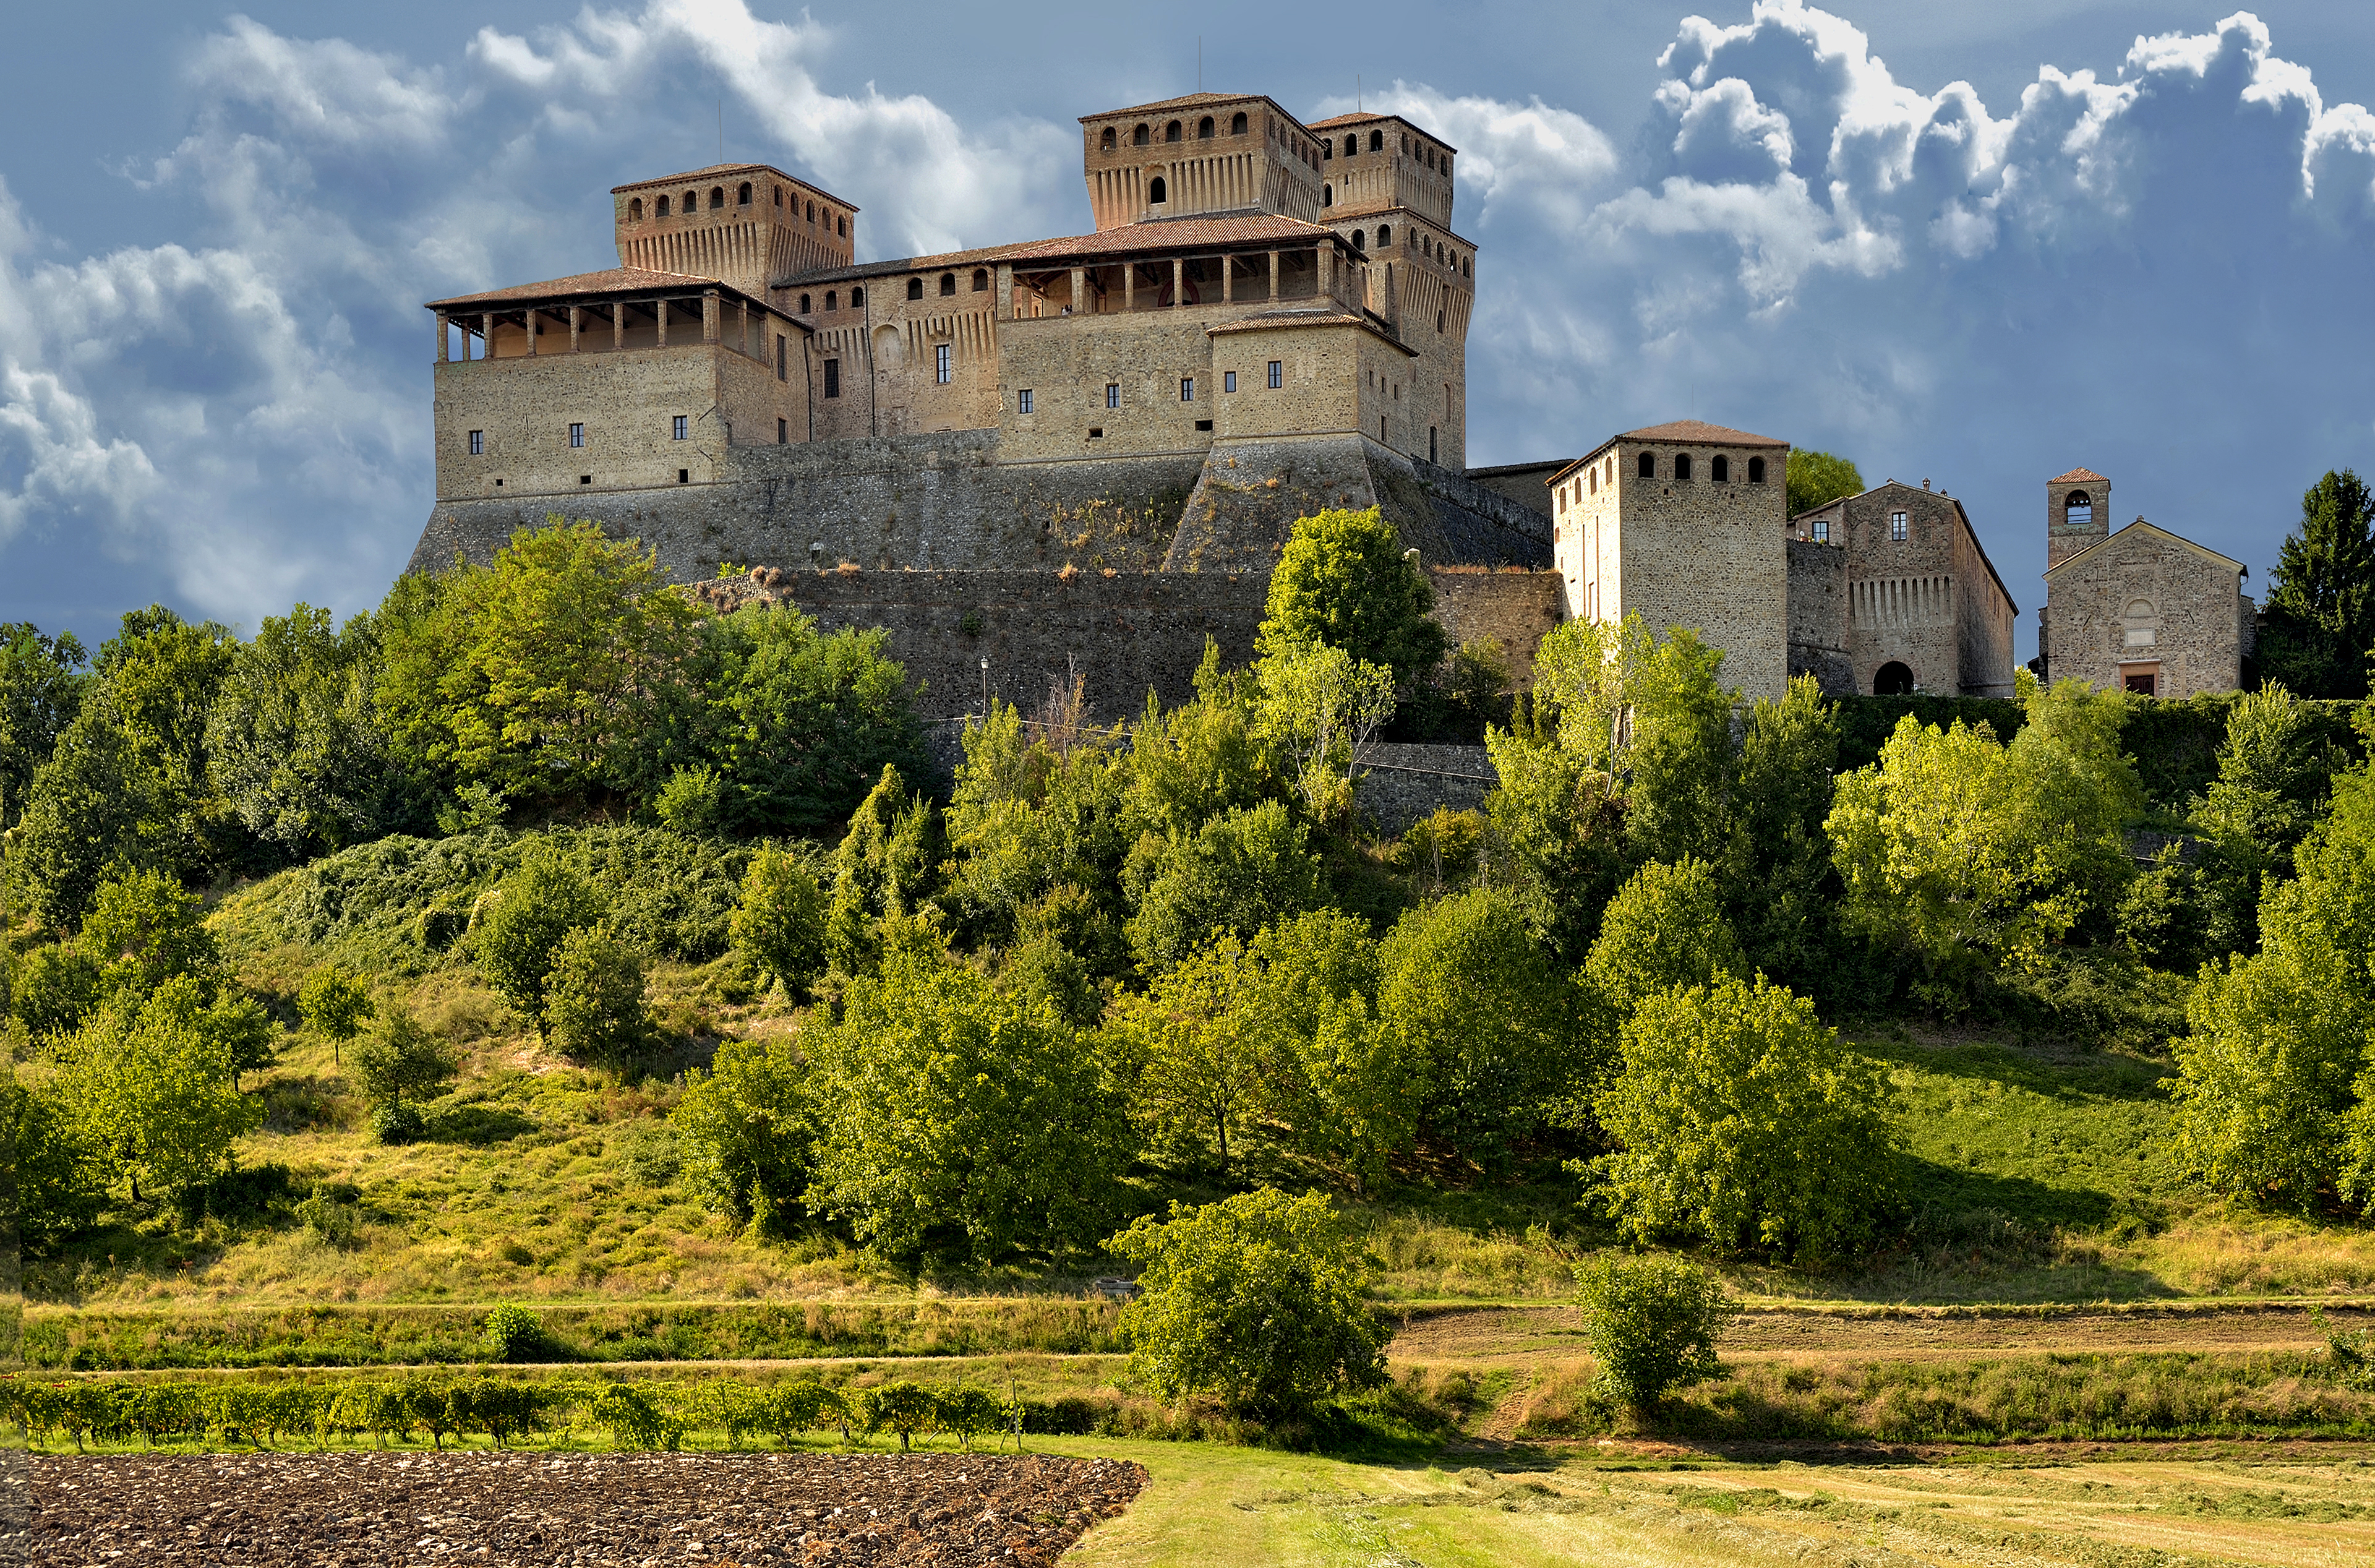 photo: https://upload.wikimedia.org/wikipedia/commons/9/92/Castello_di_Torrechiara_e_dintorni.jpg